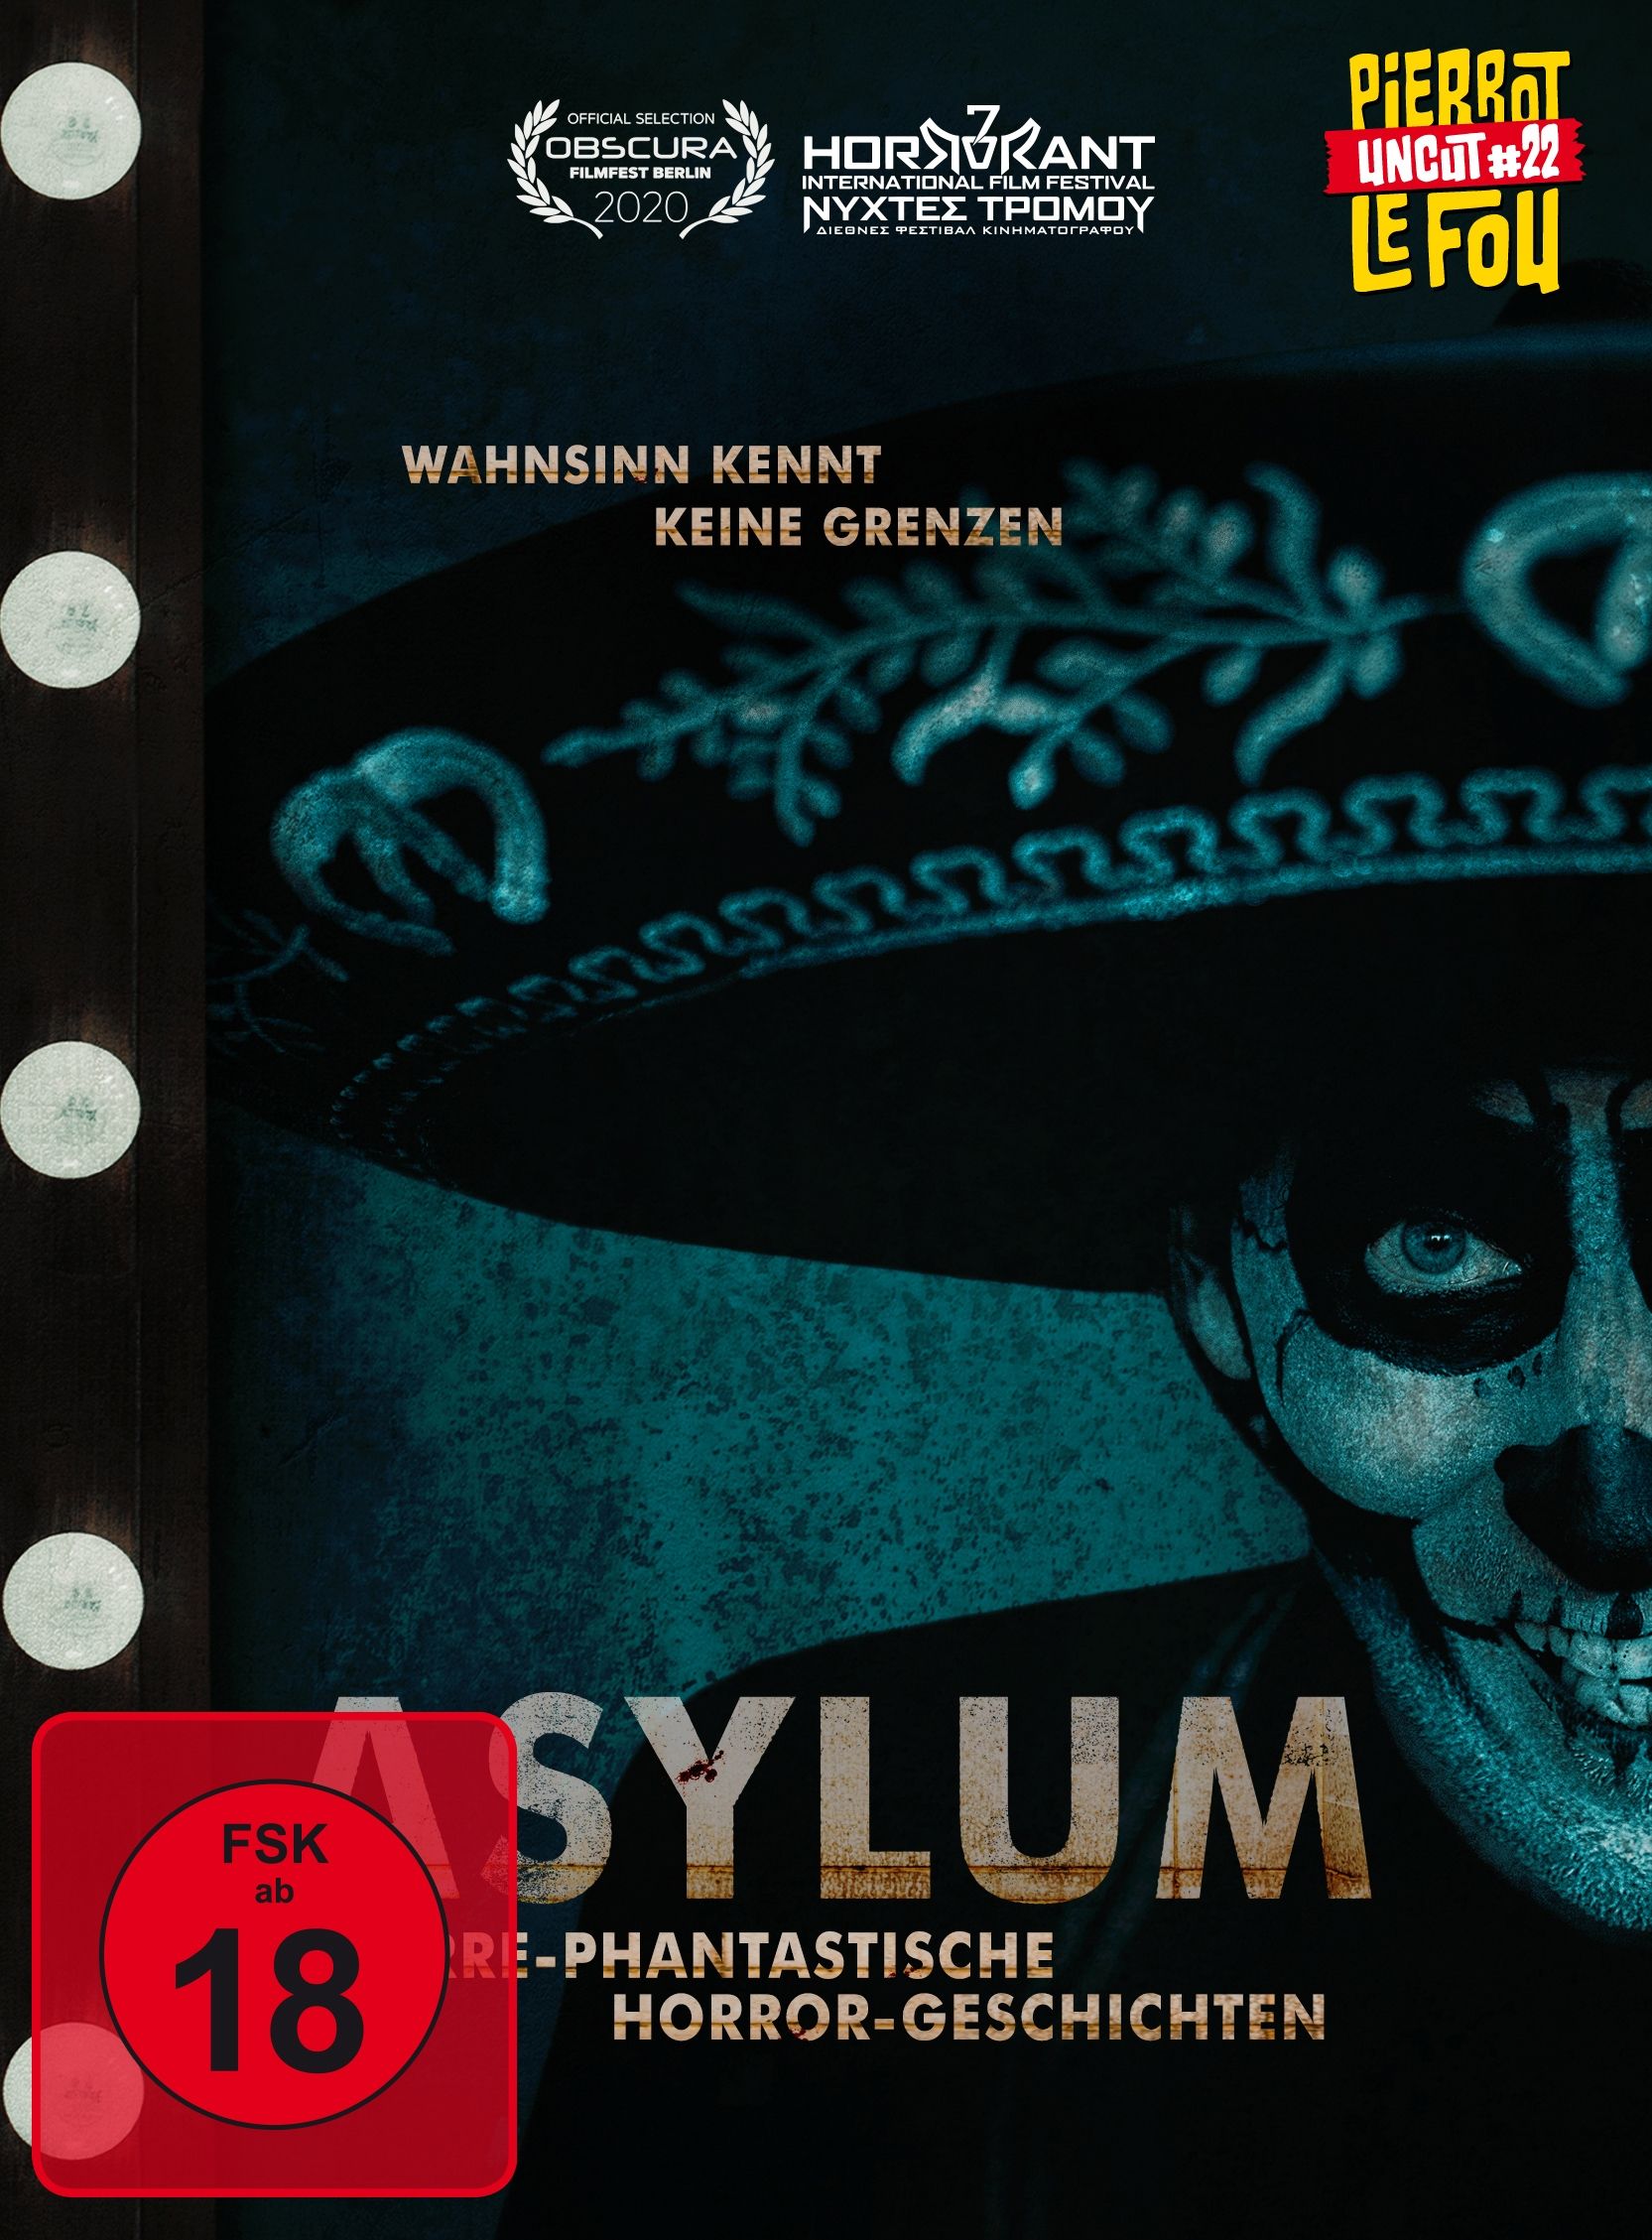 Asylum - Irre-phantastische Horror-Geschichten (Lim. Uncut Mediabook - Cover C) (DVD + BLURAY)